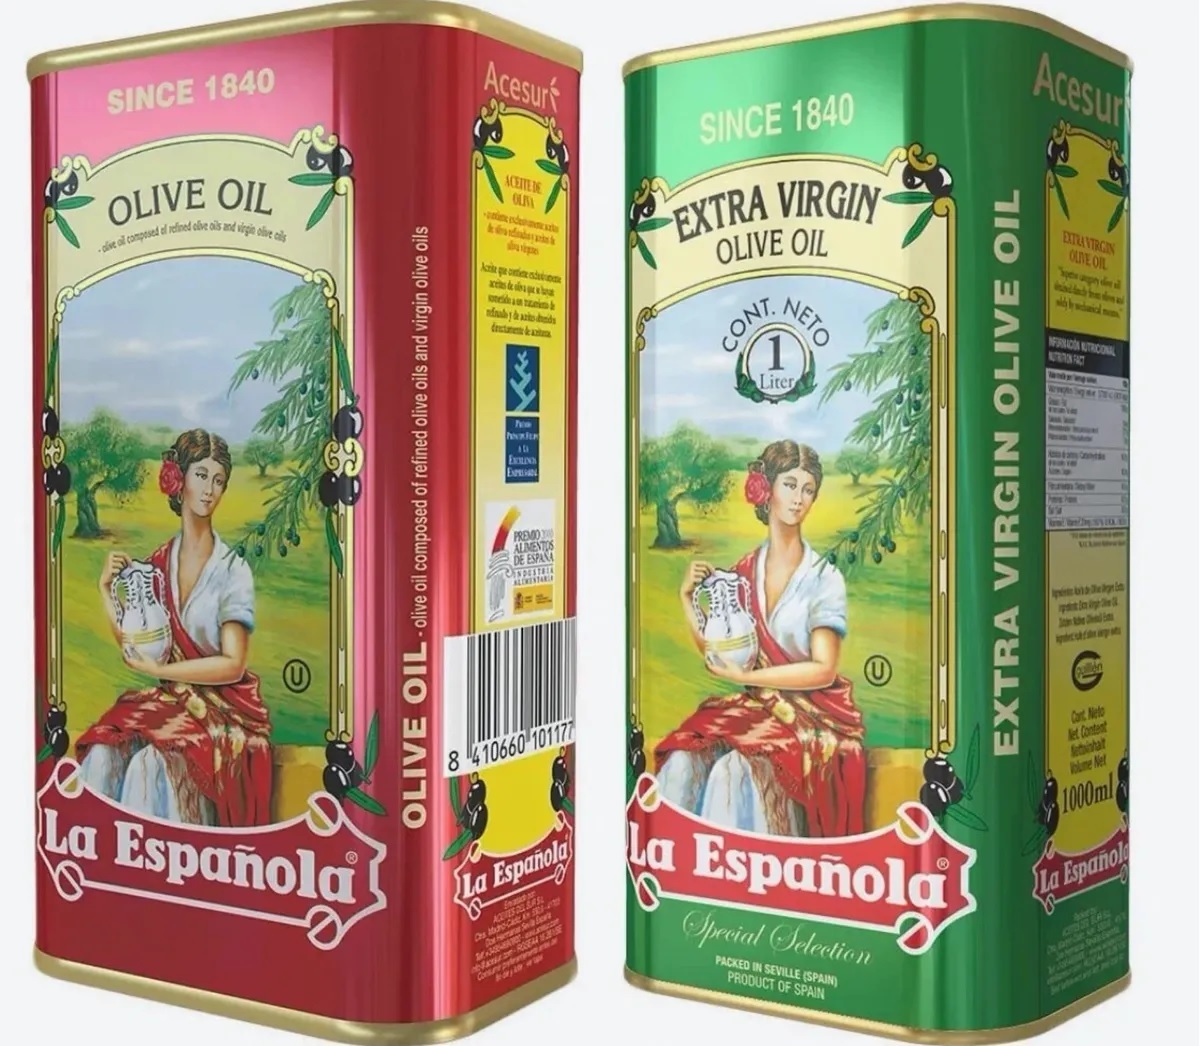 La espanola масло оливковое Extra Virgin, жестяная банка. Масло оливковое la espanola. Оливковое масло в жестяных банках 1 литр. Масло оливковое в жестяной банке 1 л.